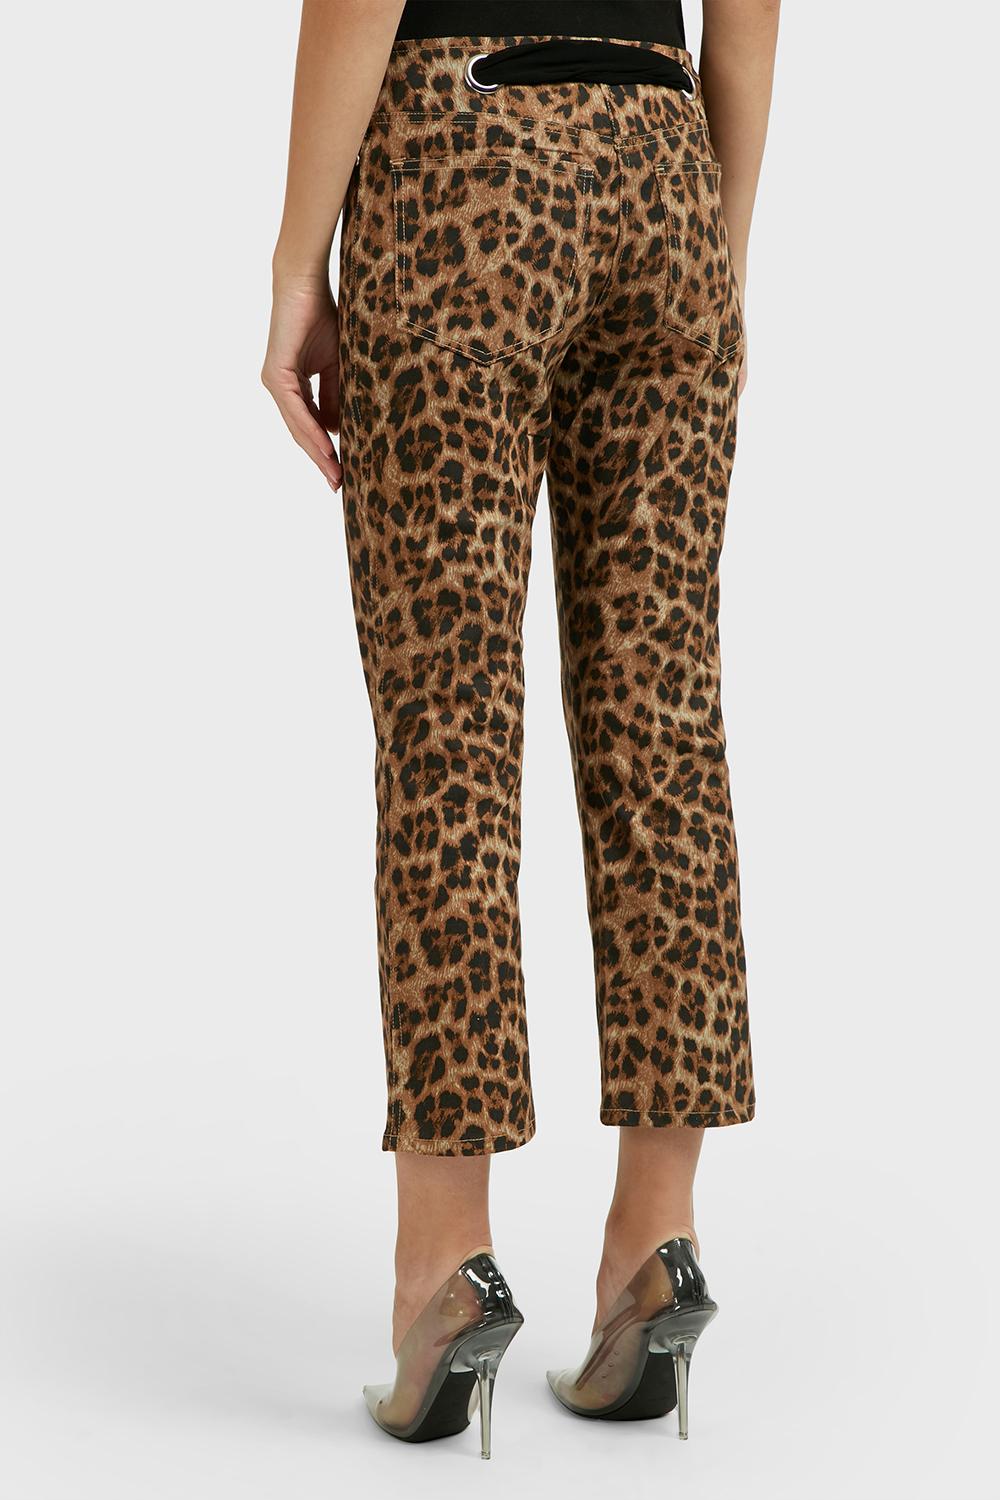 Miaou Denim Tommy Leopard-print Jeans - Lyst